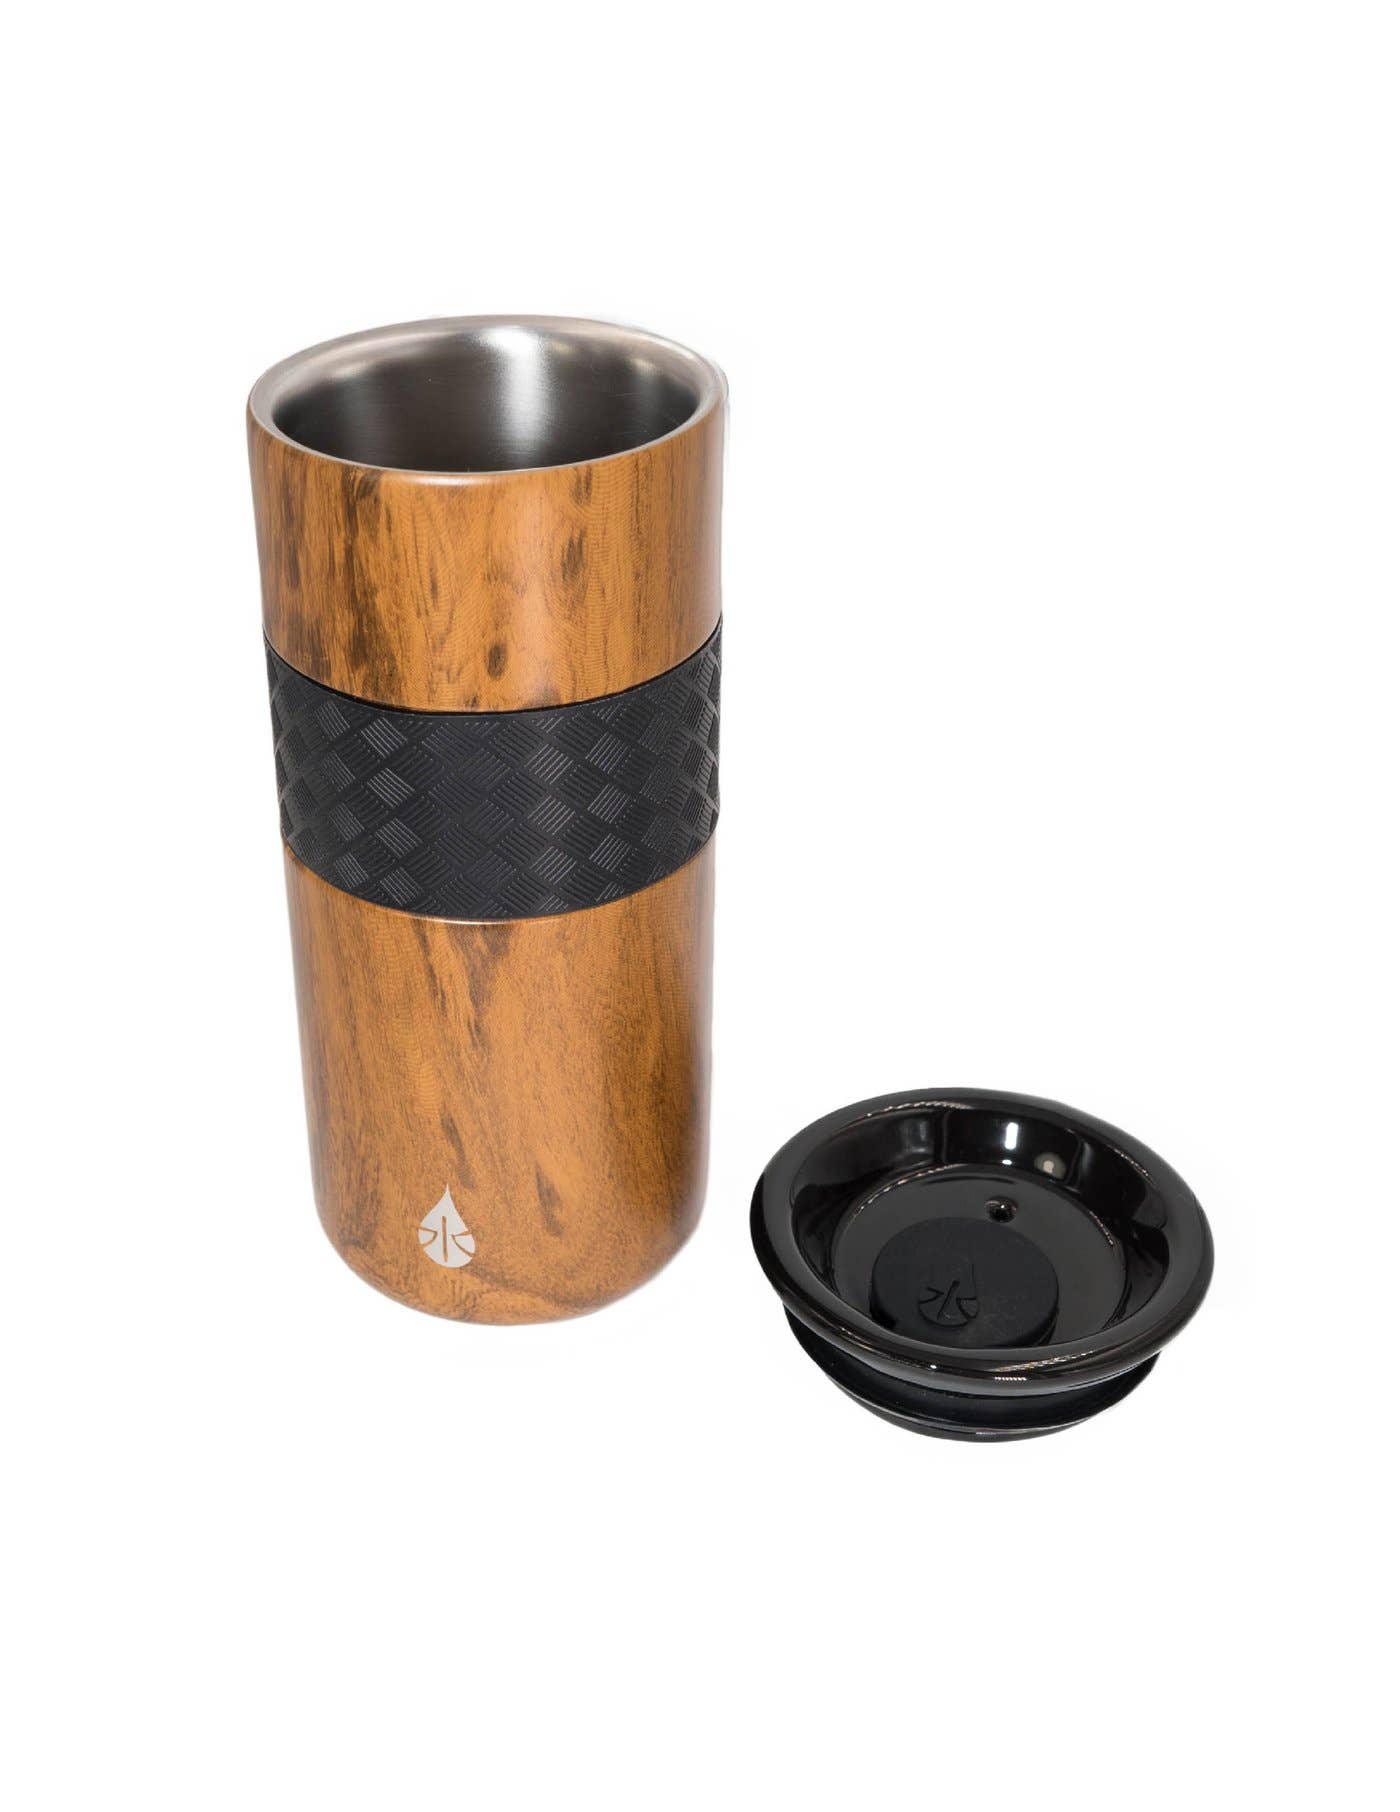 Elemental | Teak Wood Travel Mug Tumbler with Ceramic Lid Stainless Steel Insulated - 16 Oz, Mugs, Elemental, Defiance Outdoor Gear Co.